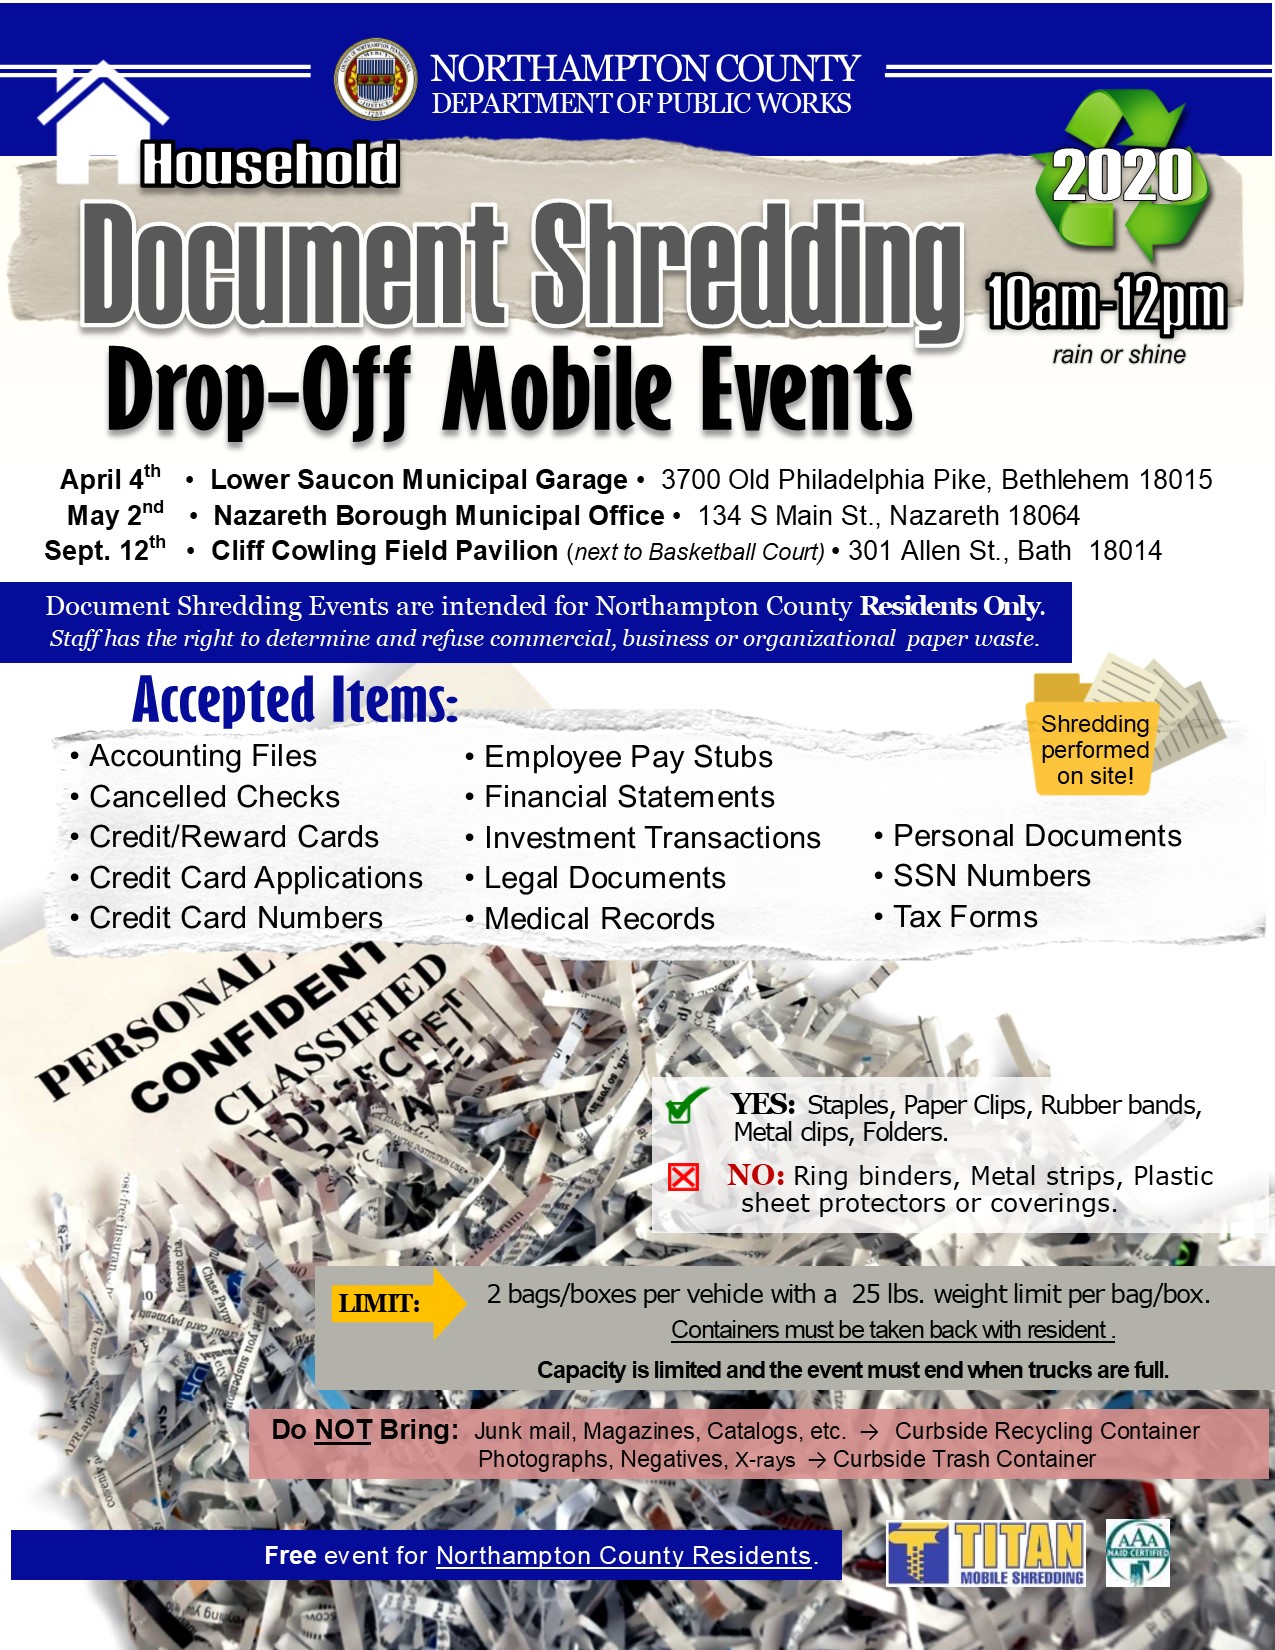 paper shredding events near me 2021